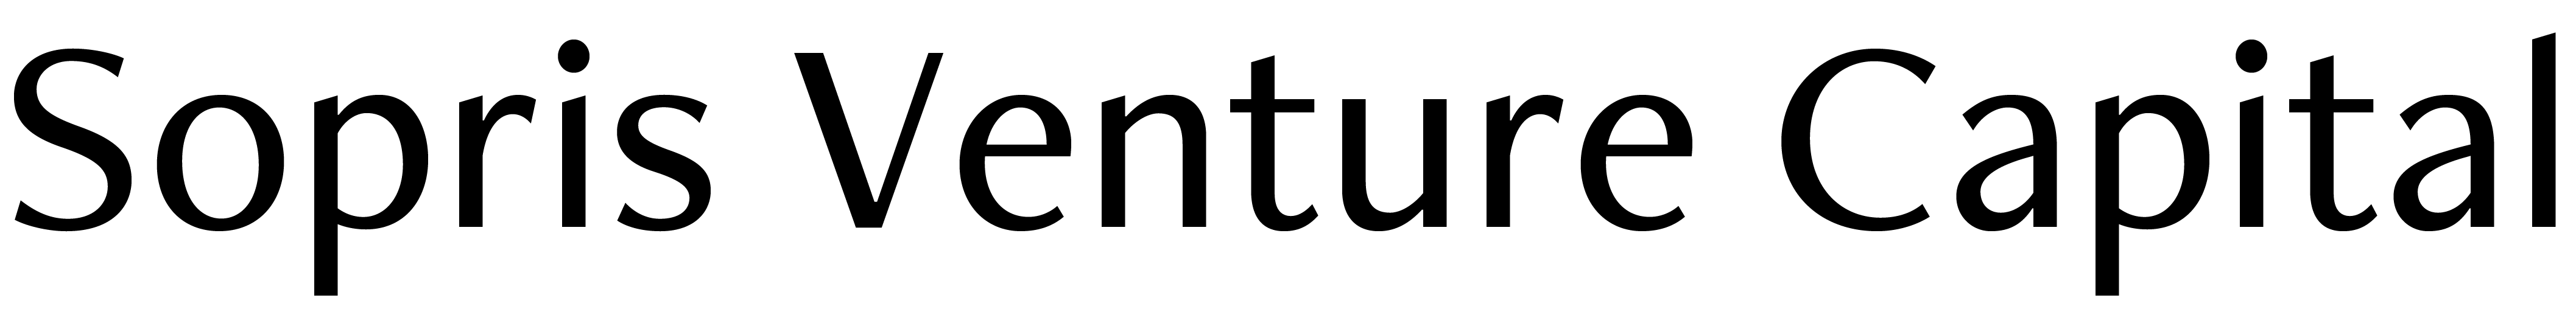 Sopris Venture Capital logo